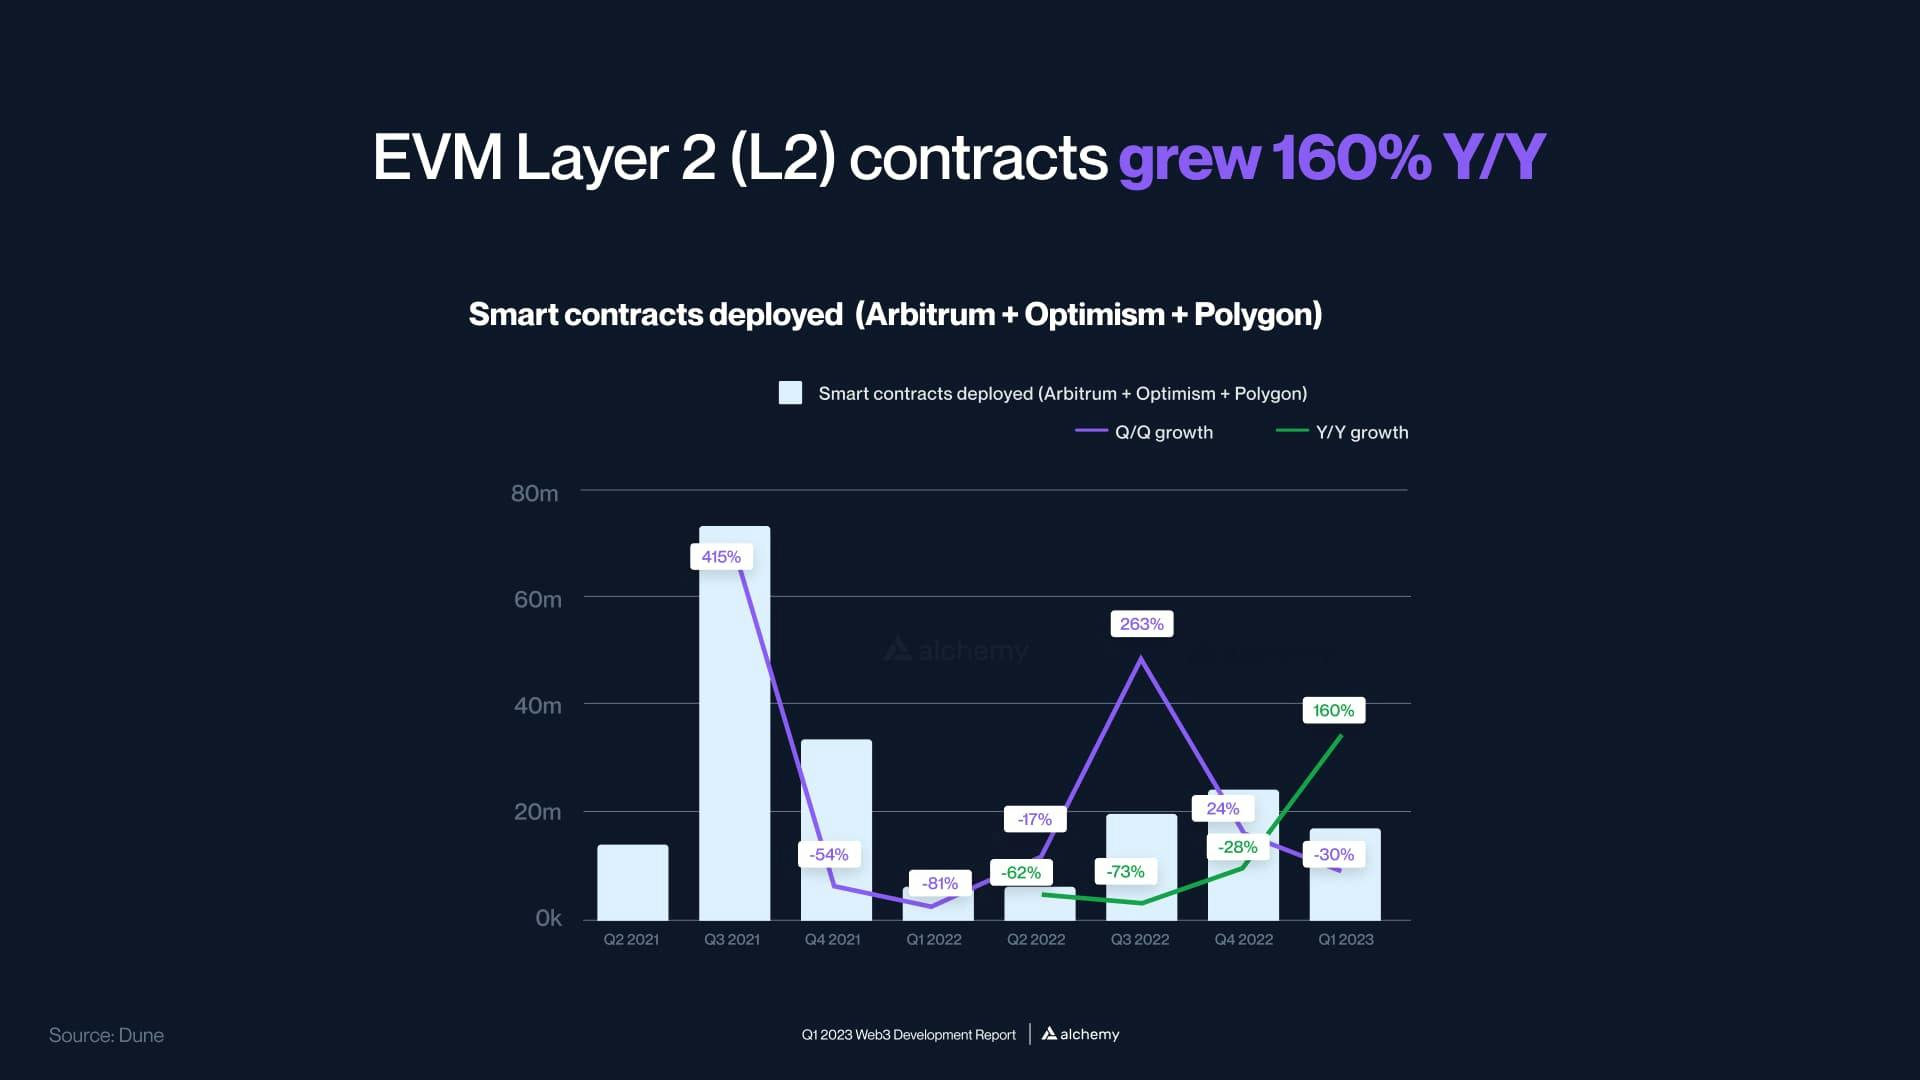 Ethereum layer 2 smart contract statistics between Q1 2023 and Q1 2021